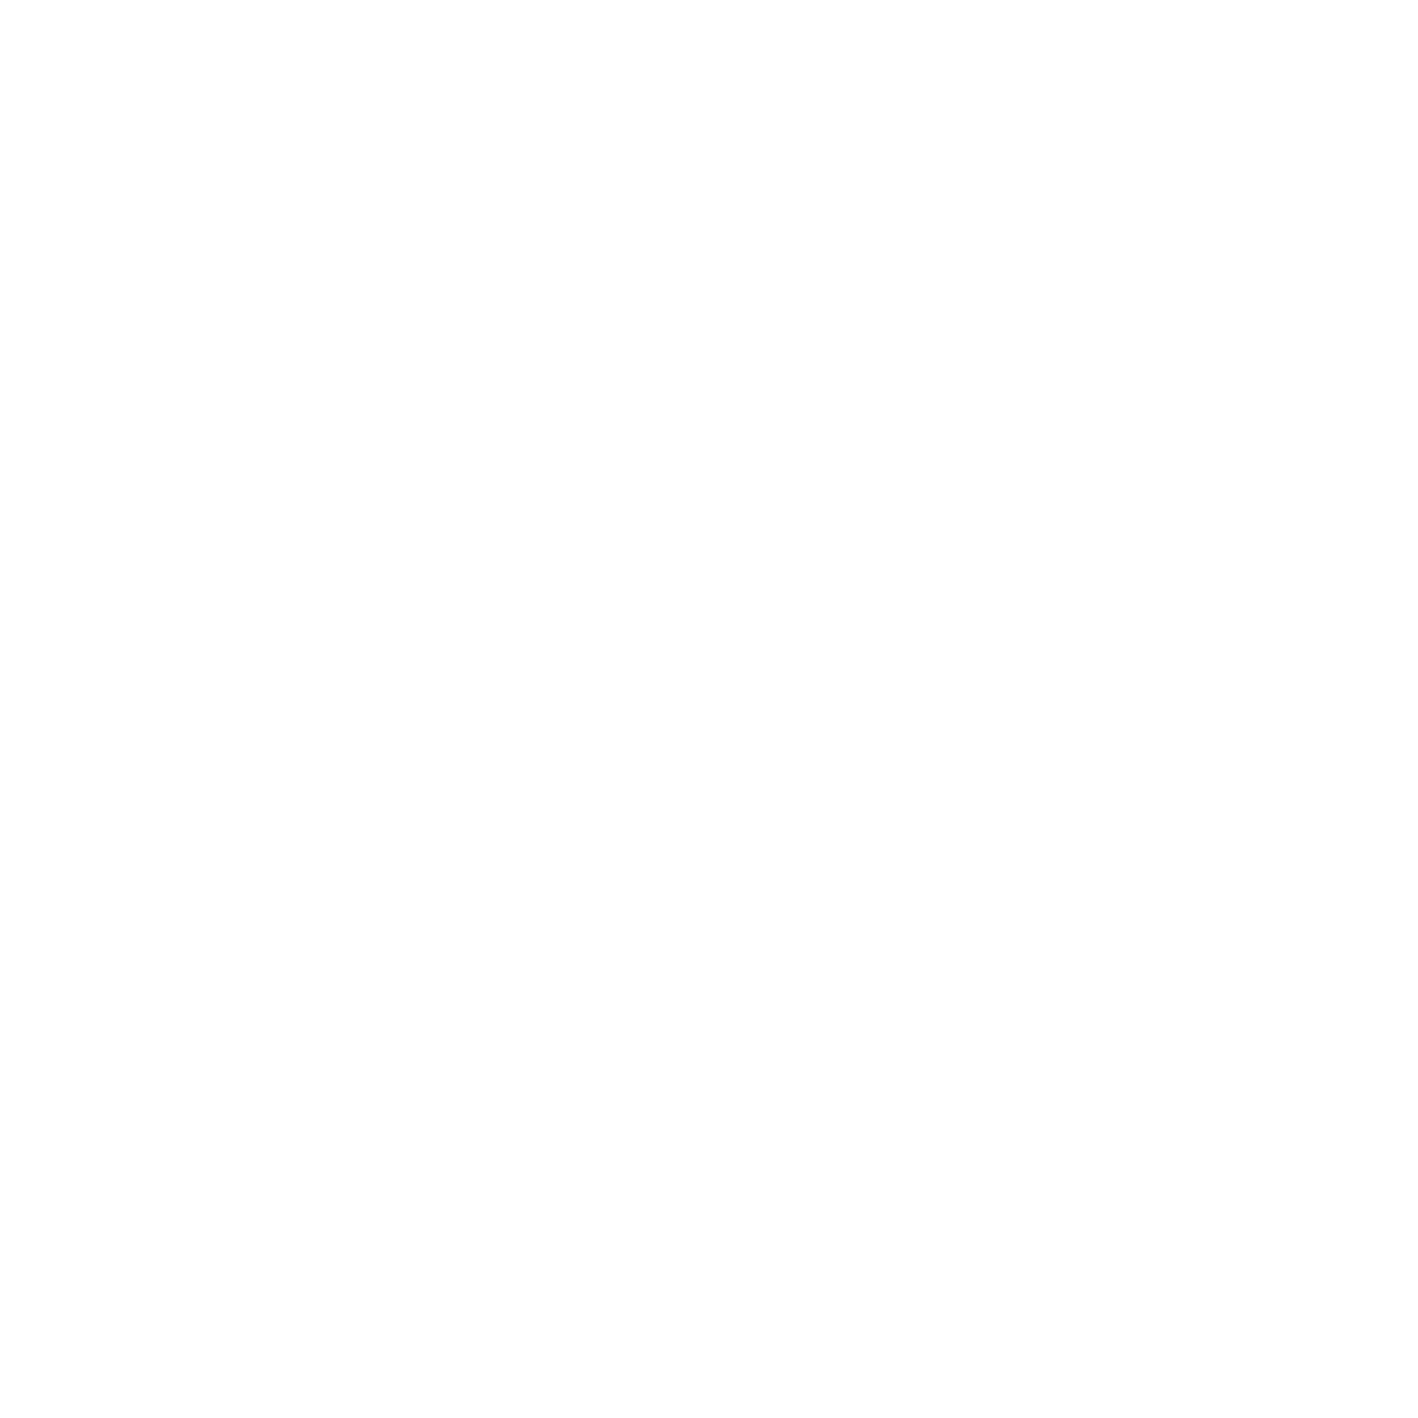 Firmenemblem Audi Ringe in Weiß.